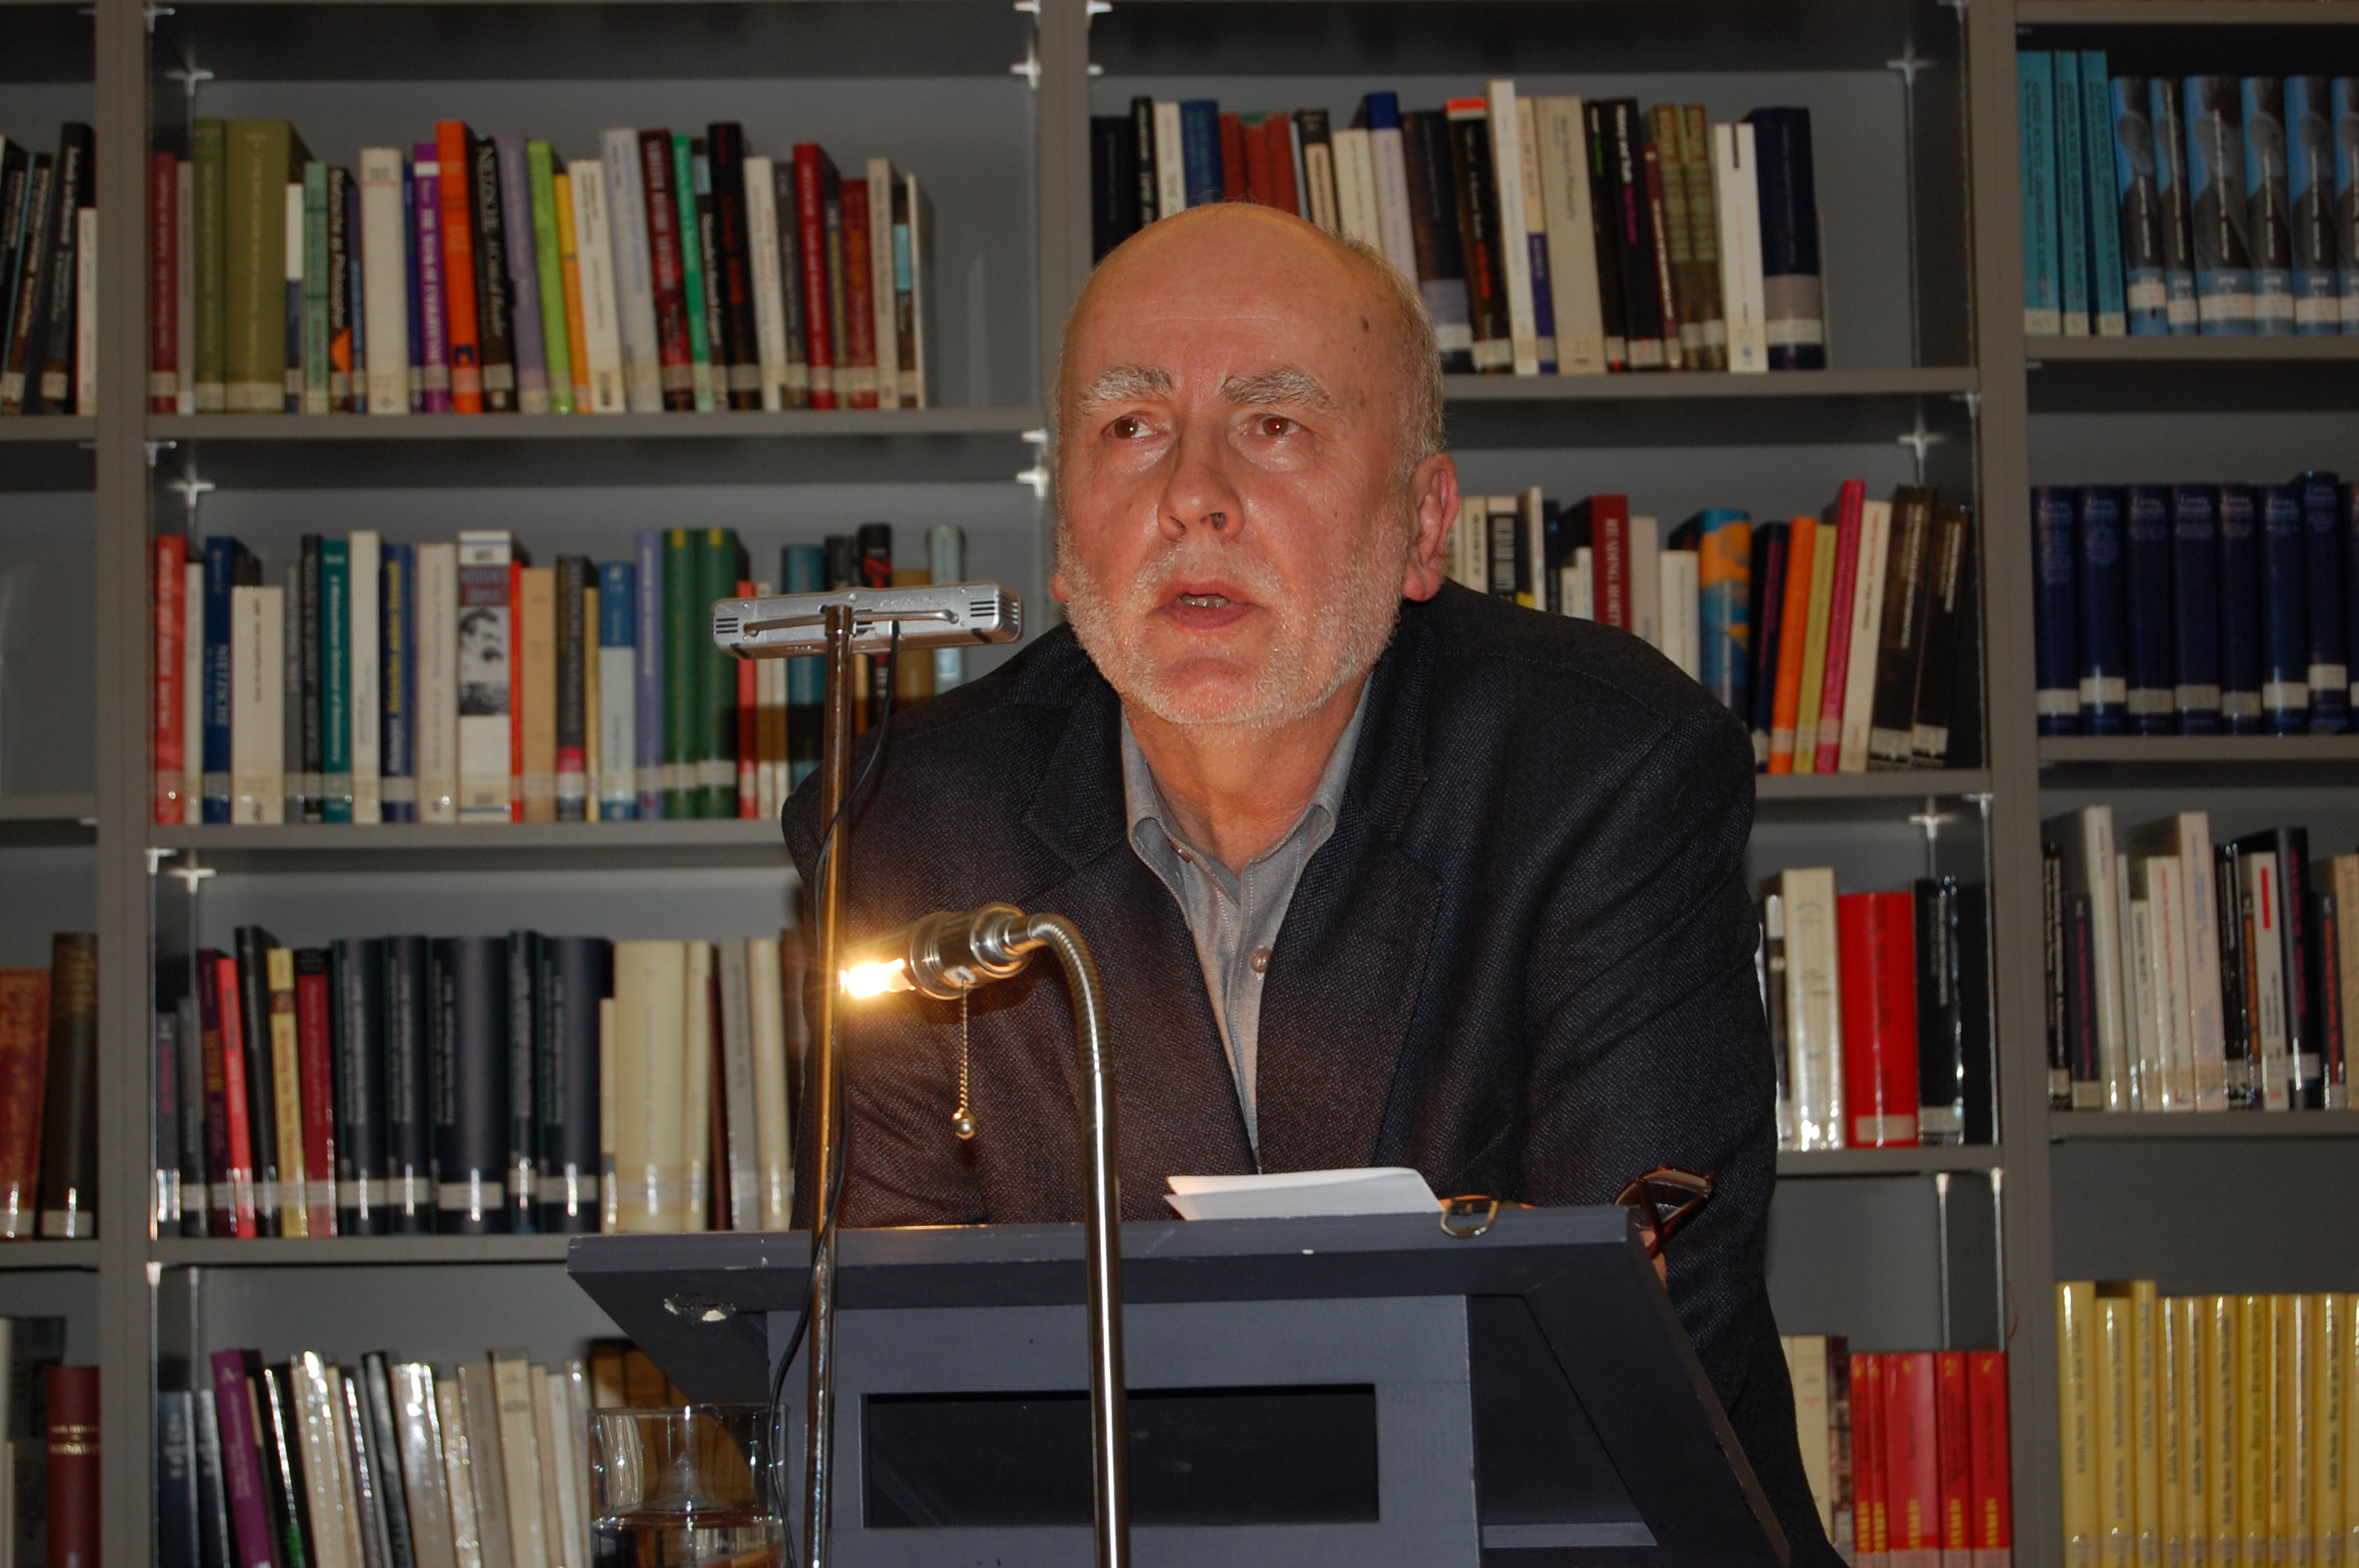 Adam Zagajewski in front of book shelves in the IWM library giving a talk